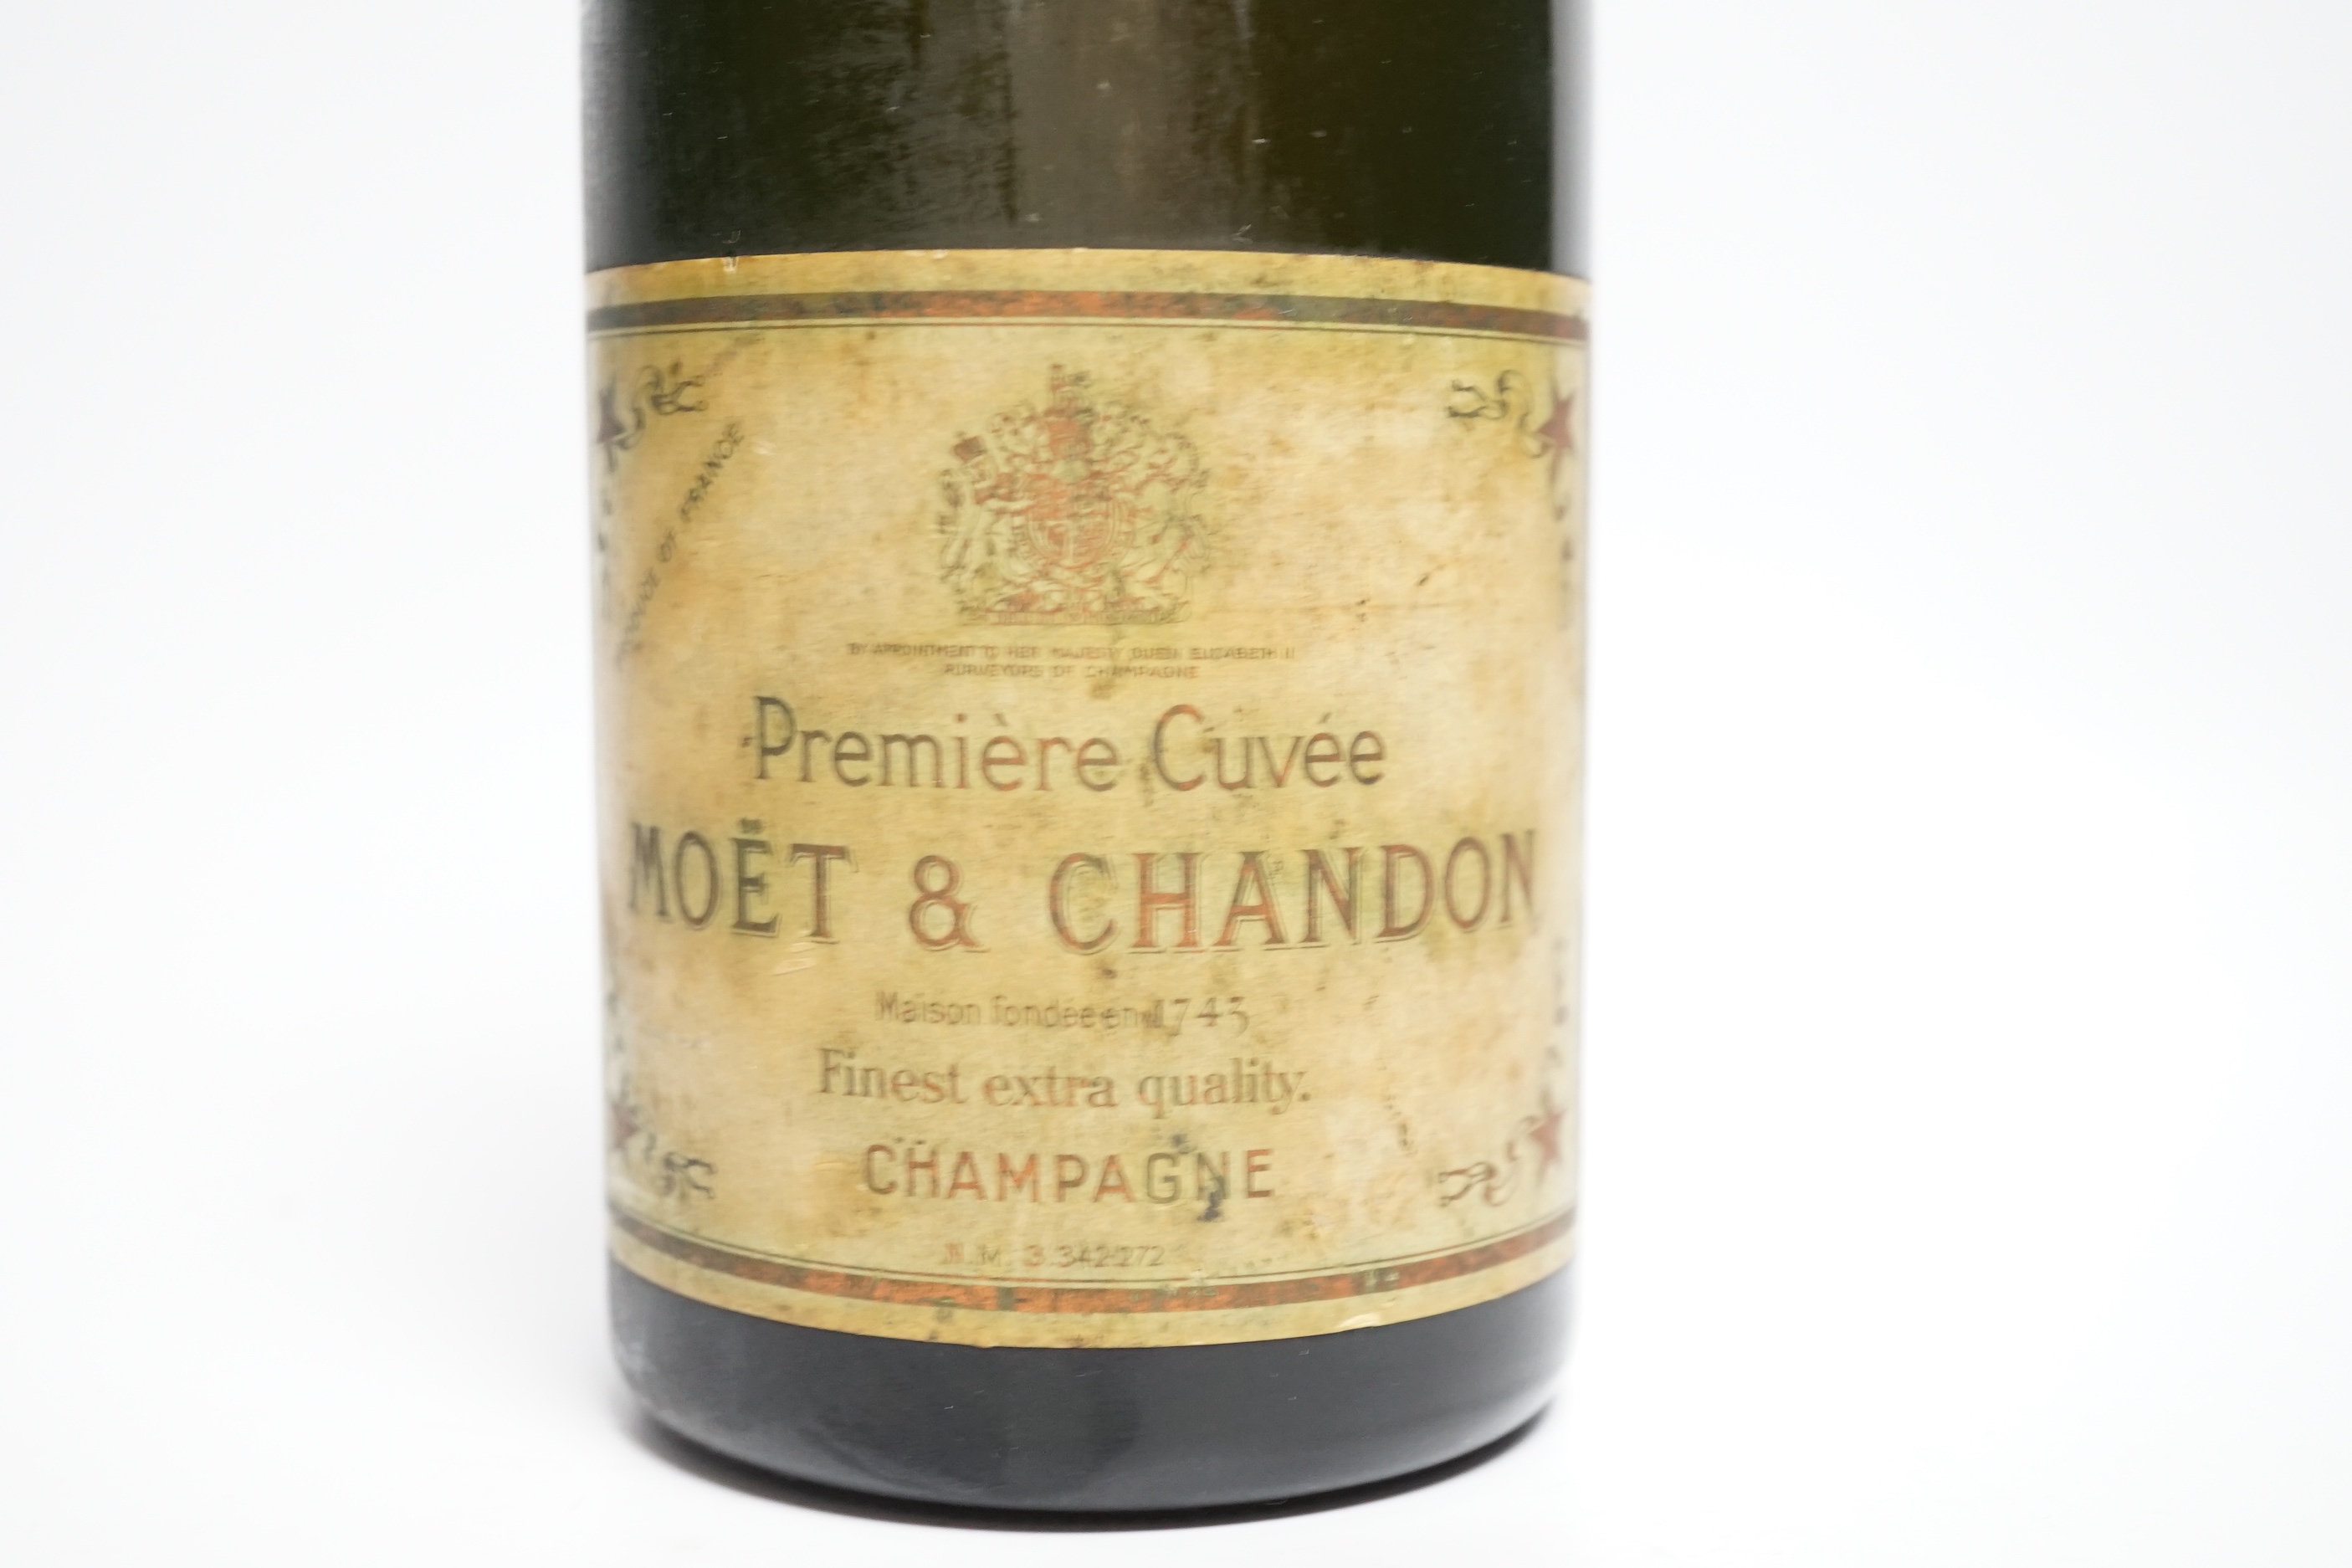 A bottle of Moet et Chandon champagne - Image 5 of 6